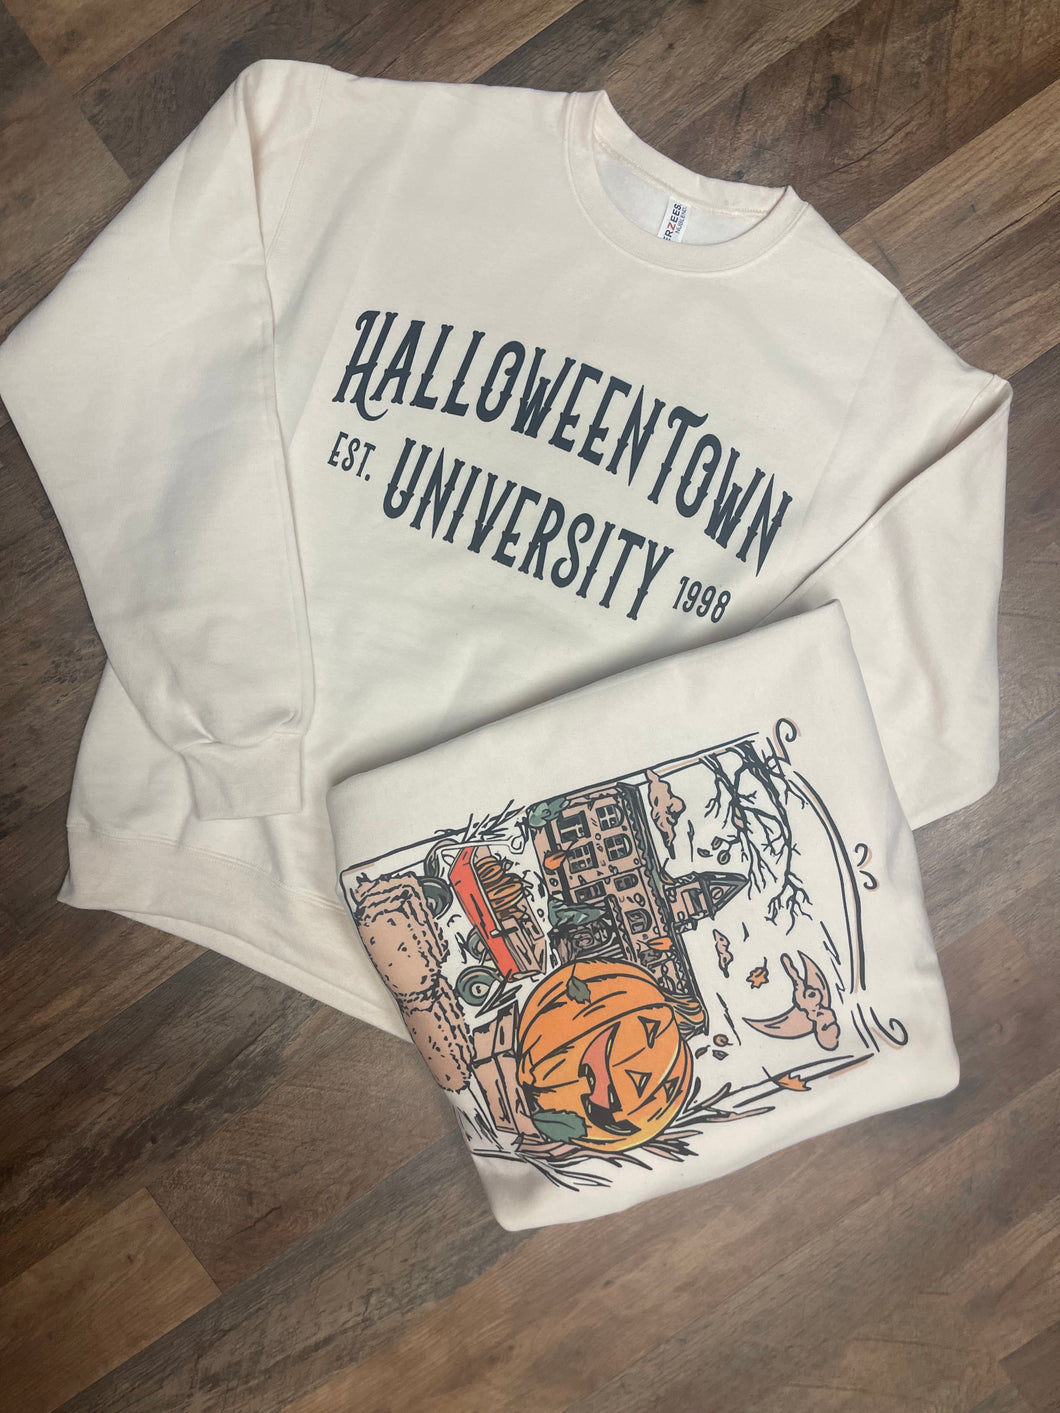 Halloween university